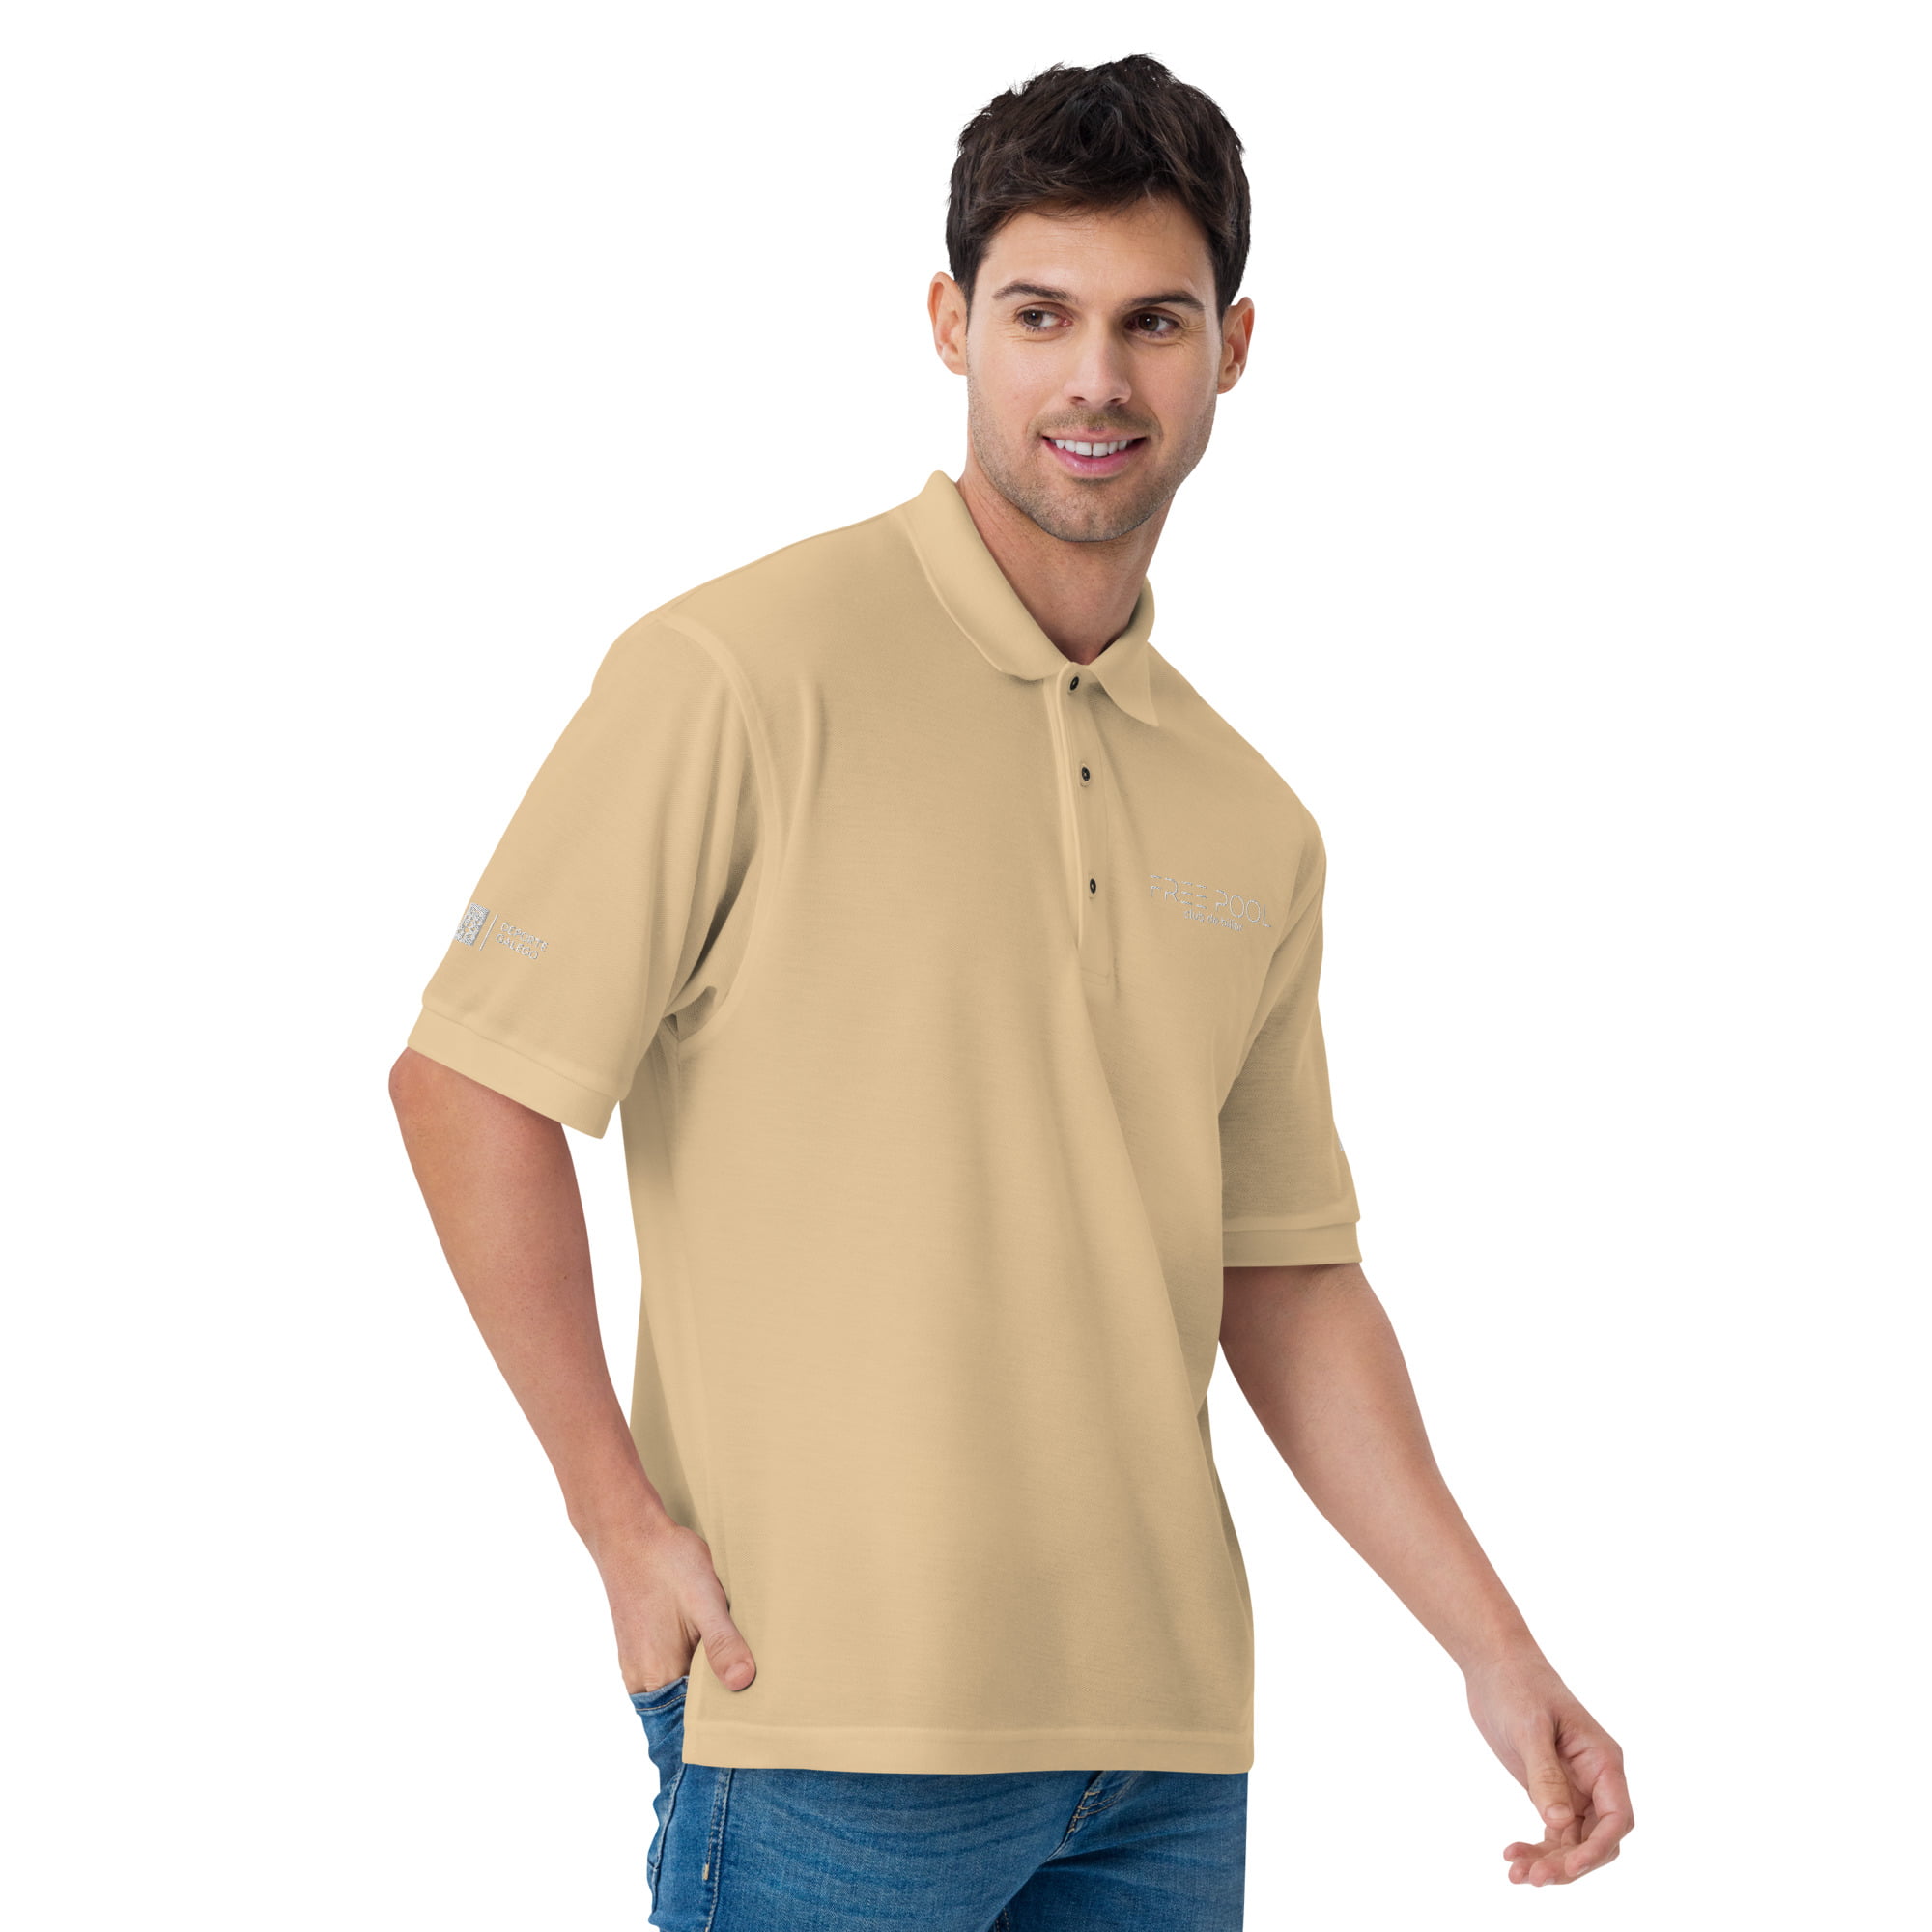 premium-polo-shirt-stone-right-front-64864692e4a3f.jpg